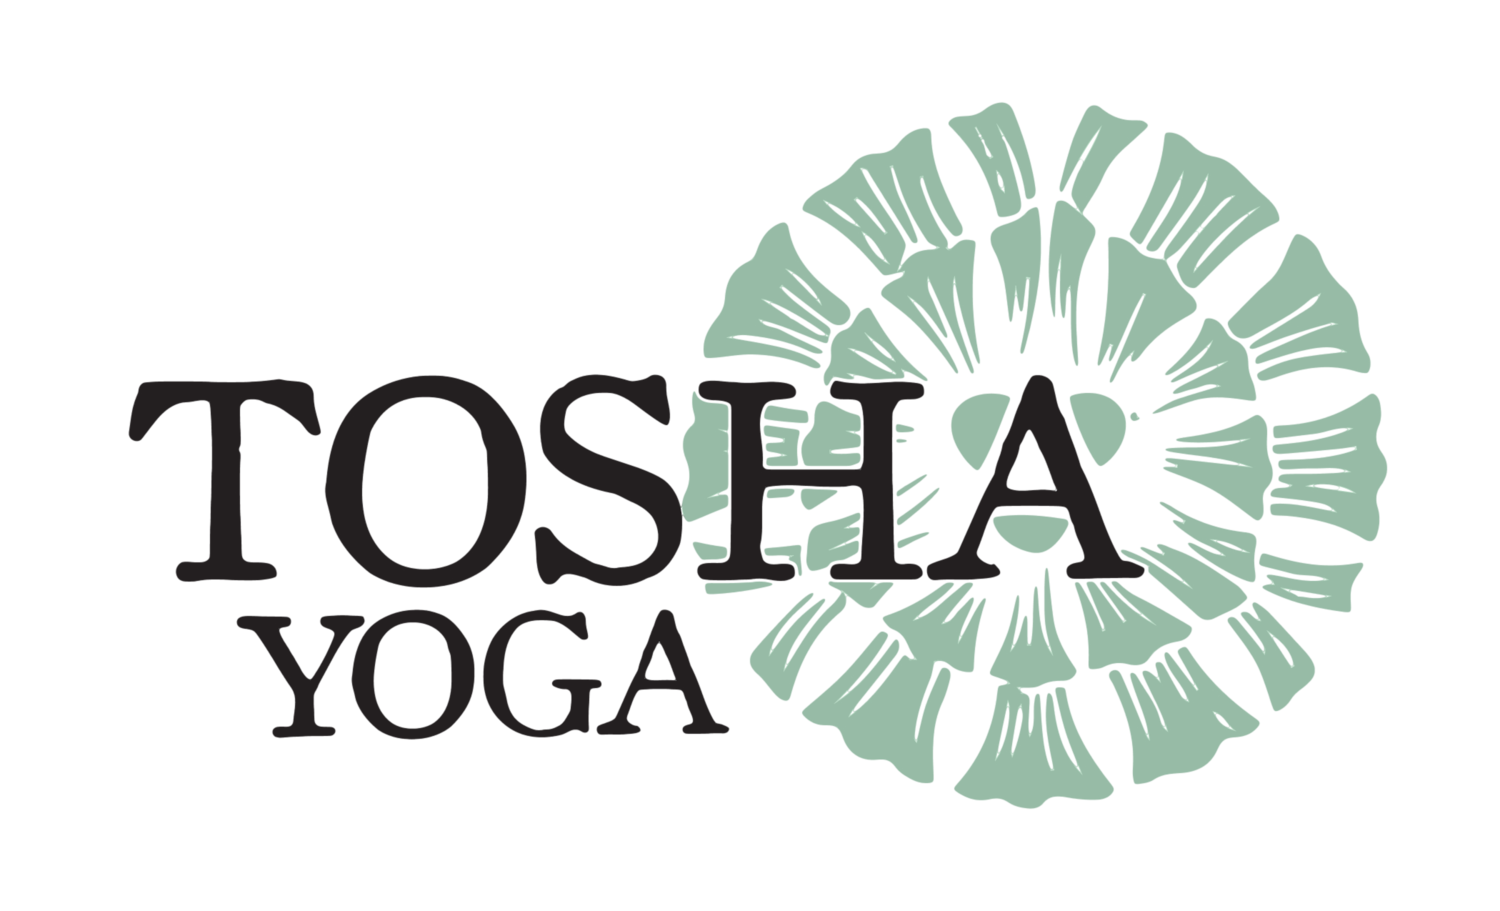 Tosha Yoga